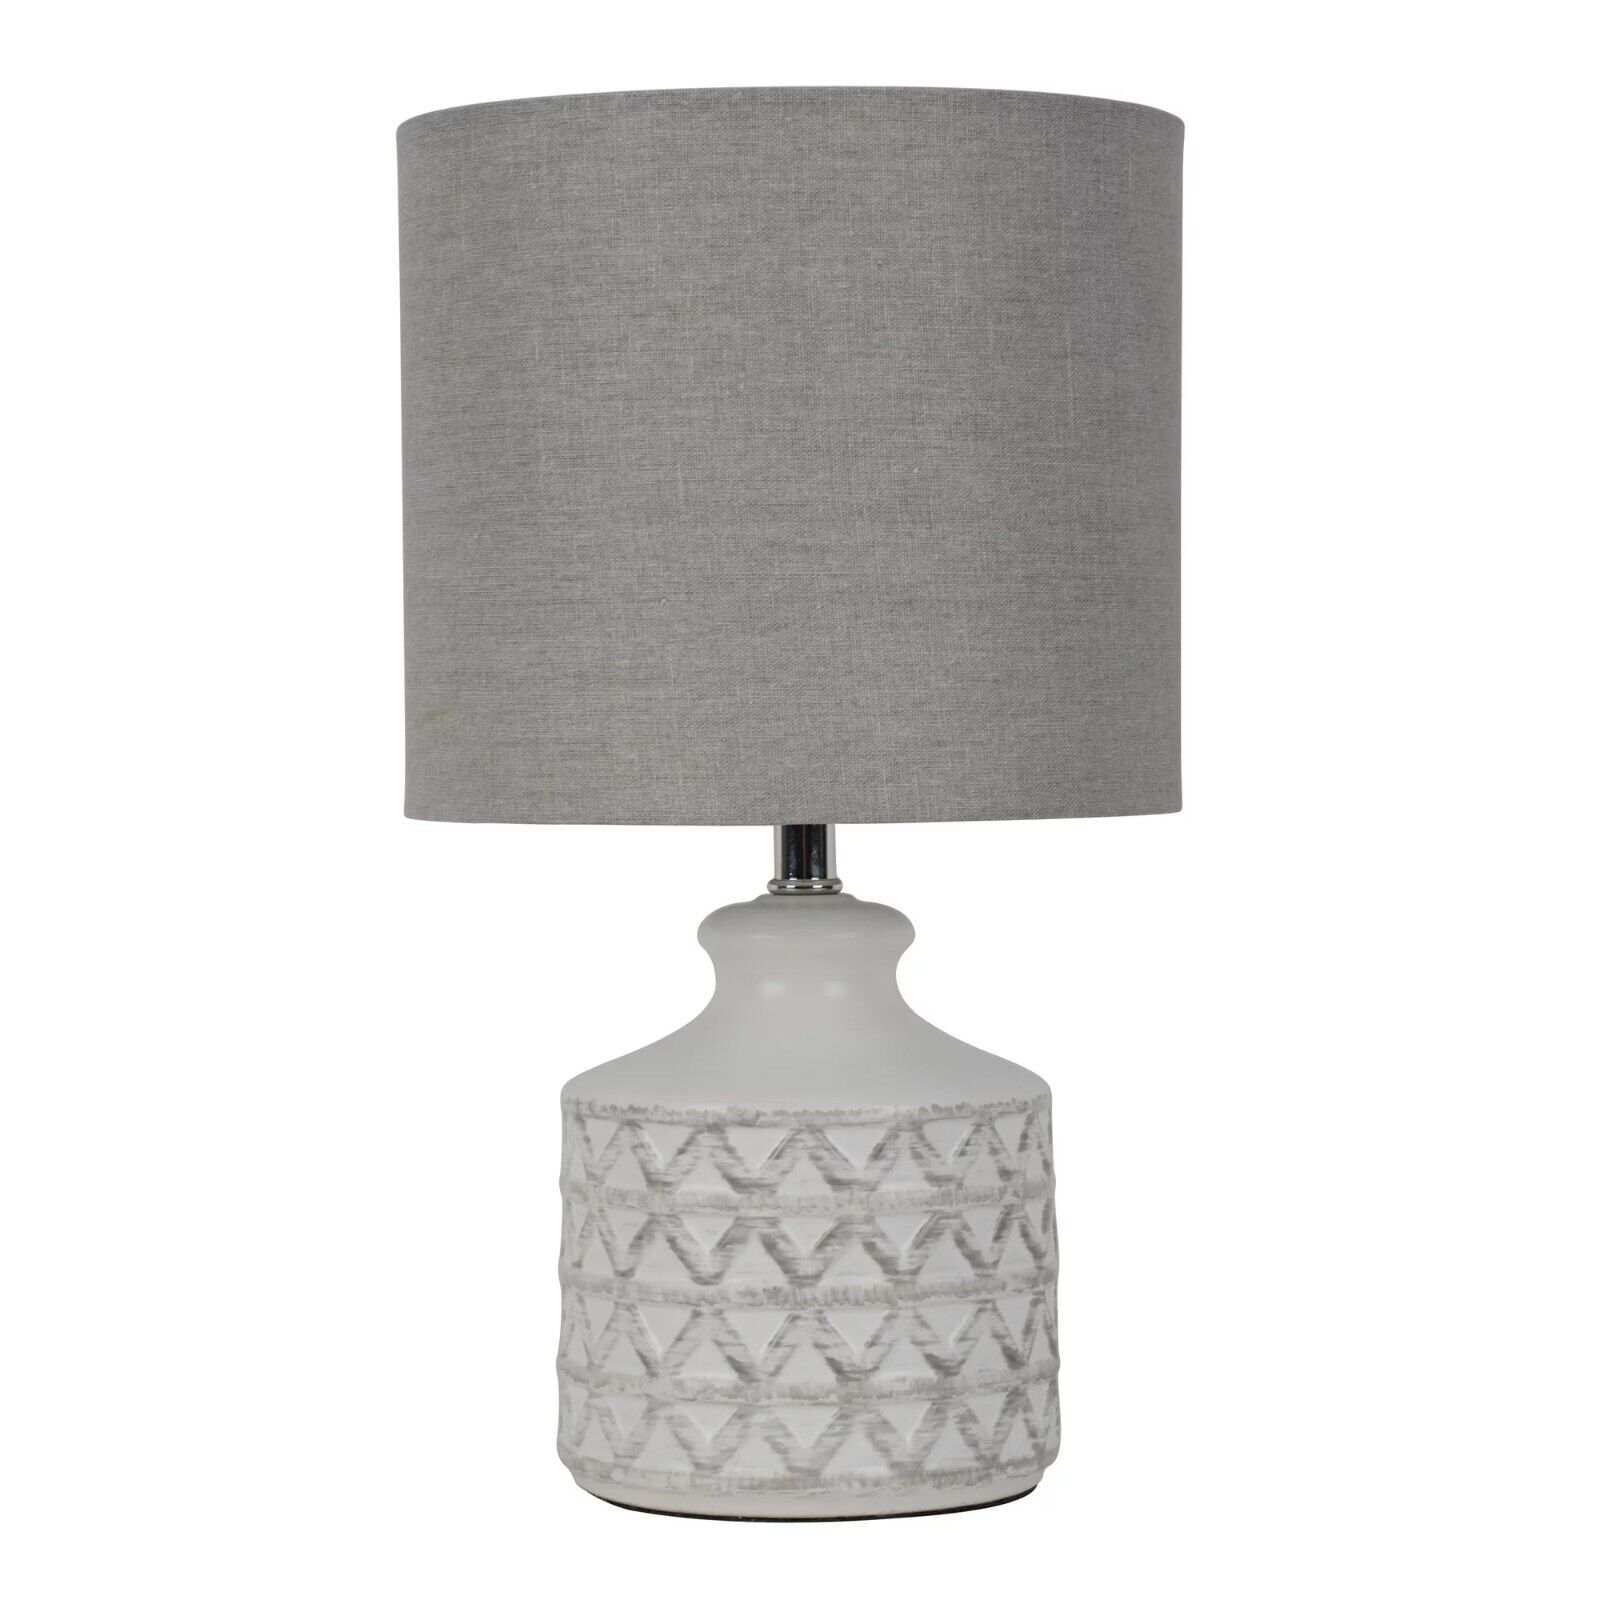 Diamond Weave Ceramic Table Lamp, Distressed White